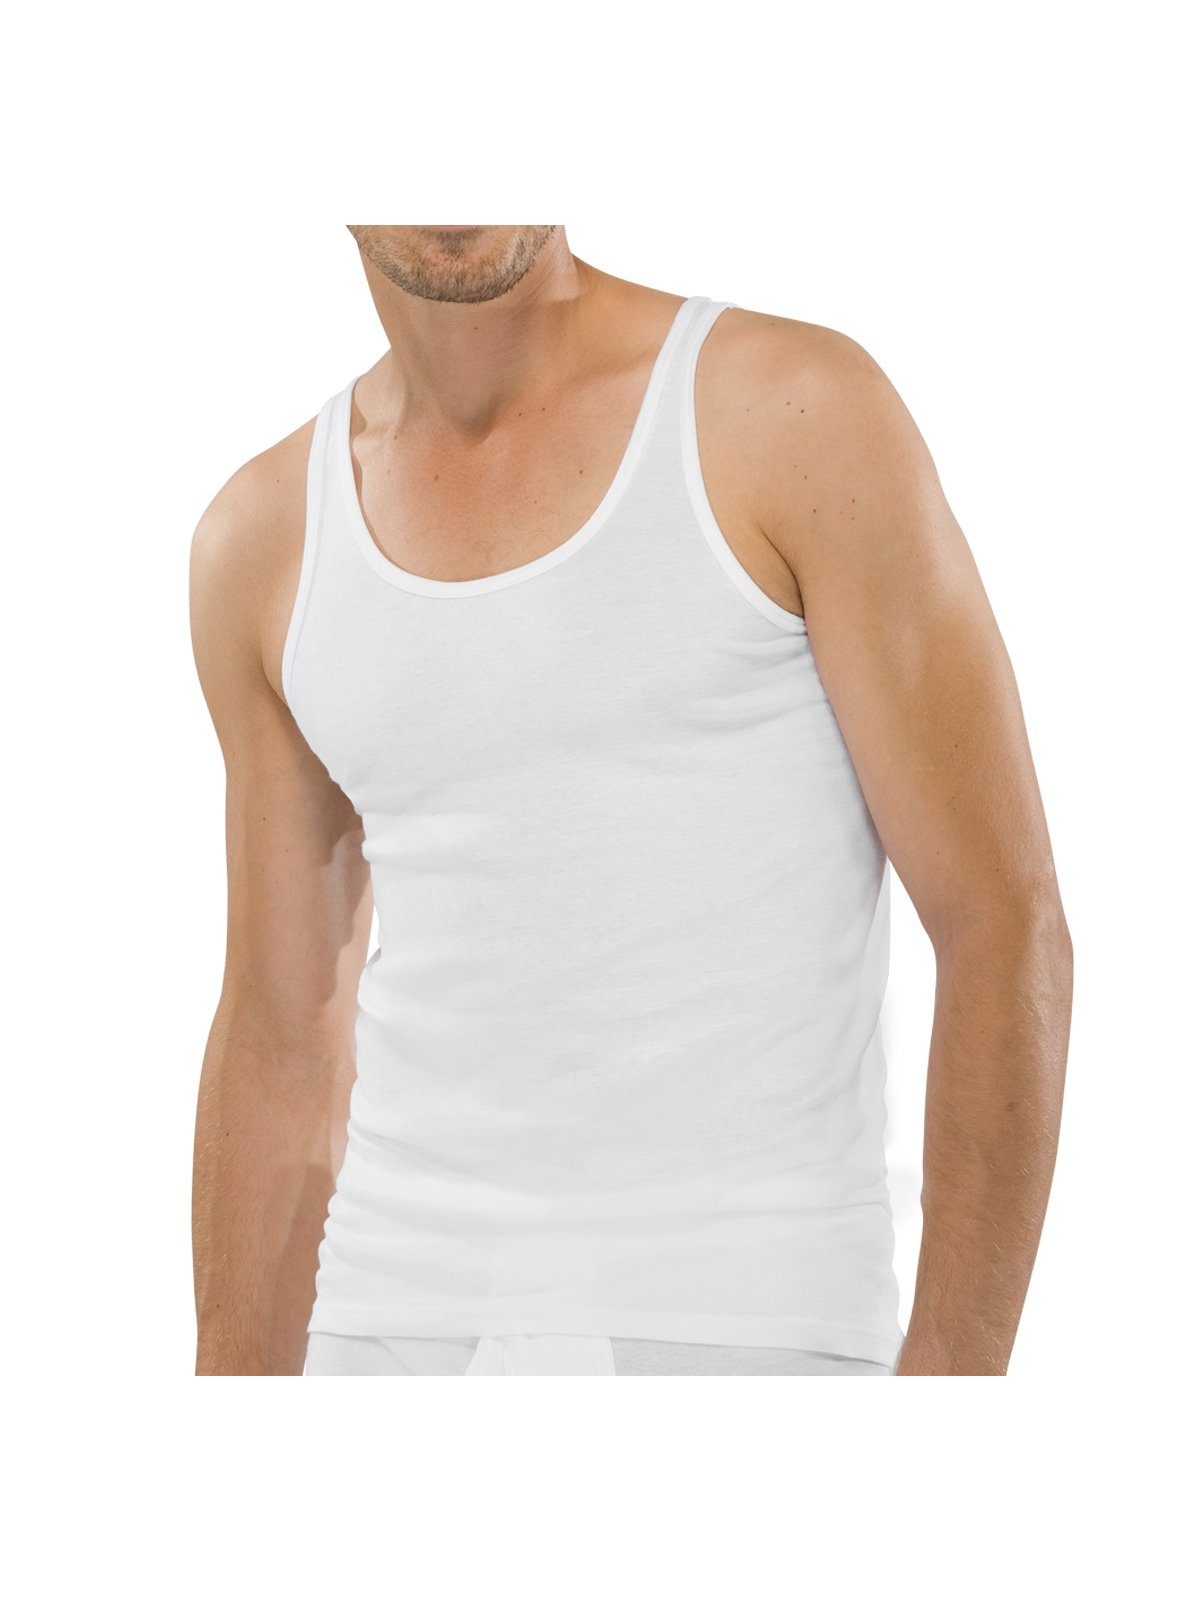 4er-Pack) Pack Feinripp Schiesser Unterhemden Unterhemd (Spar-Pack, 4er